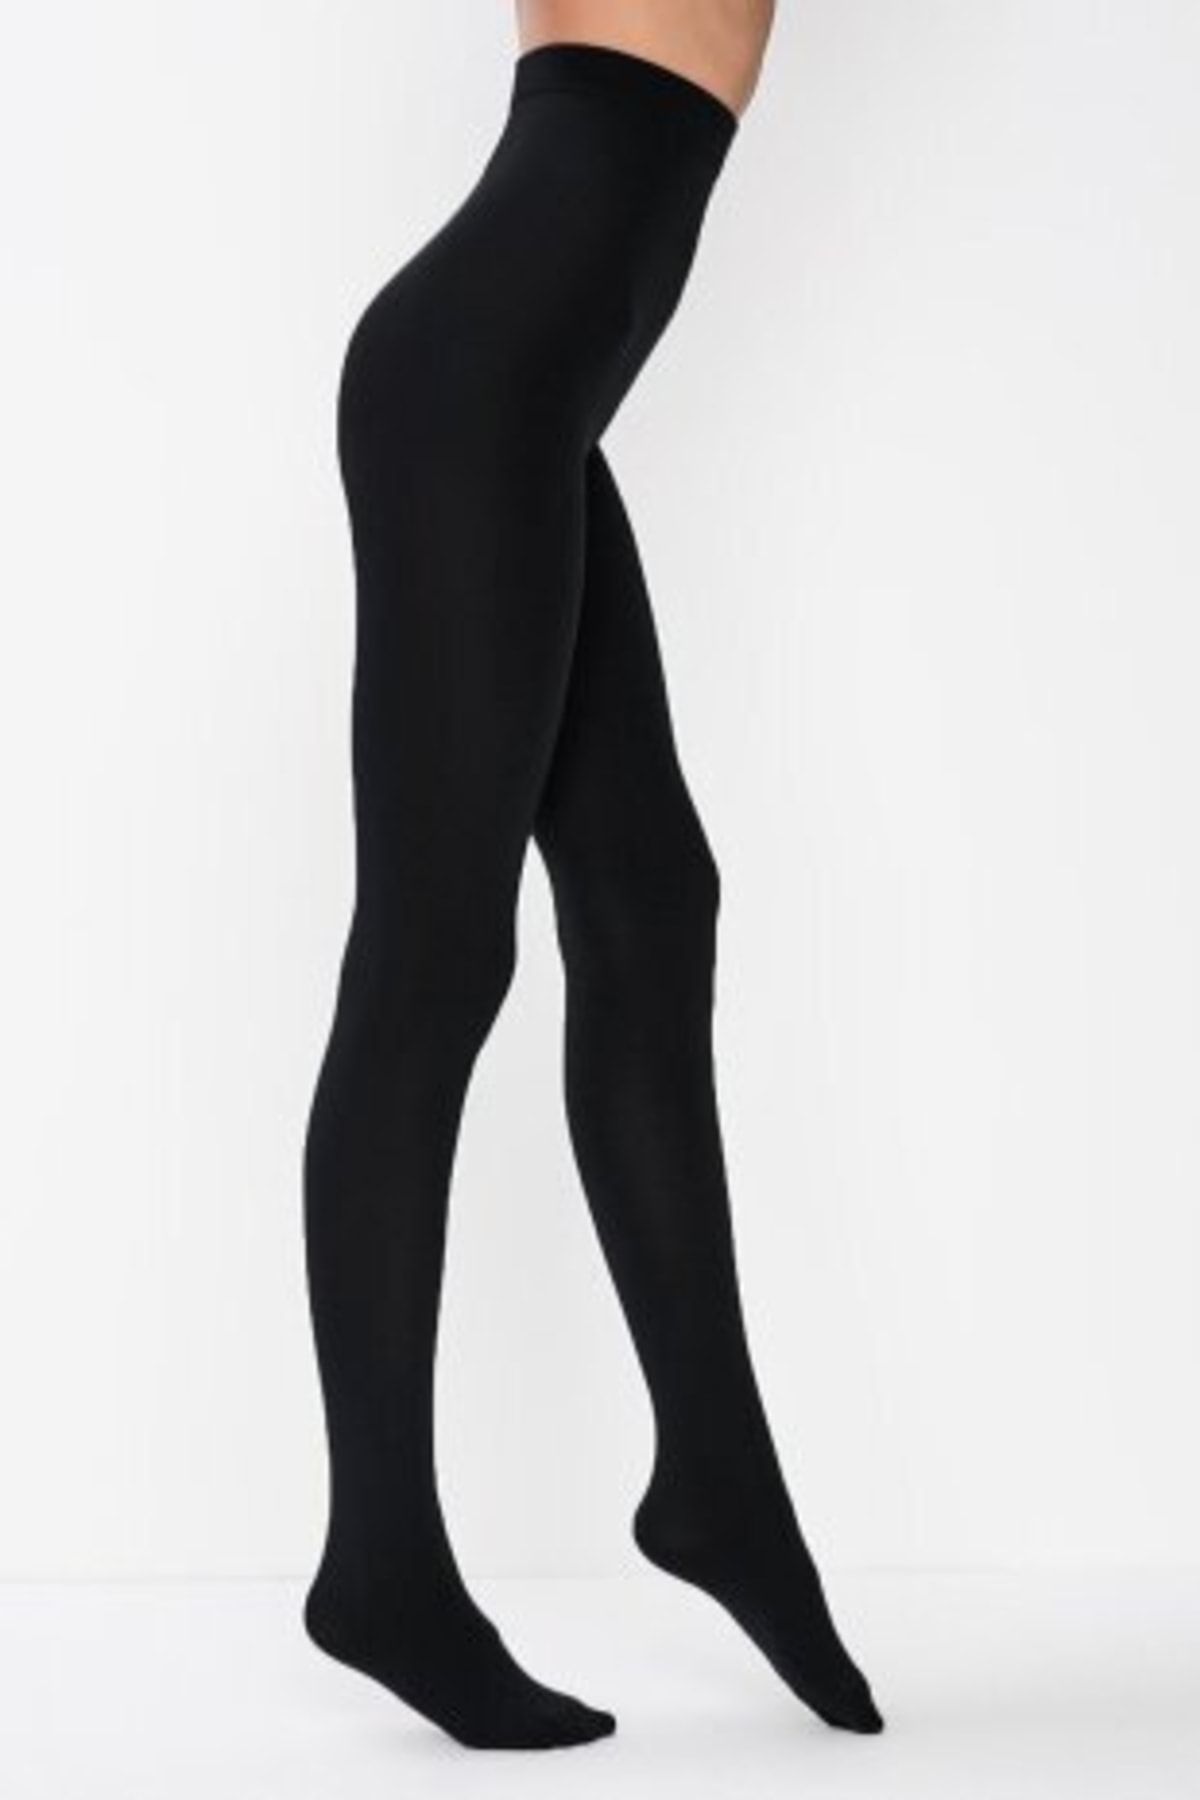 VINIA Thermal 2 Pack Black Fleece Lined Winter Flexible Pantyhose